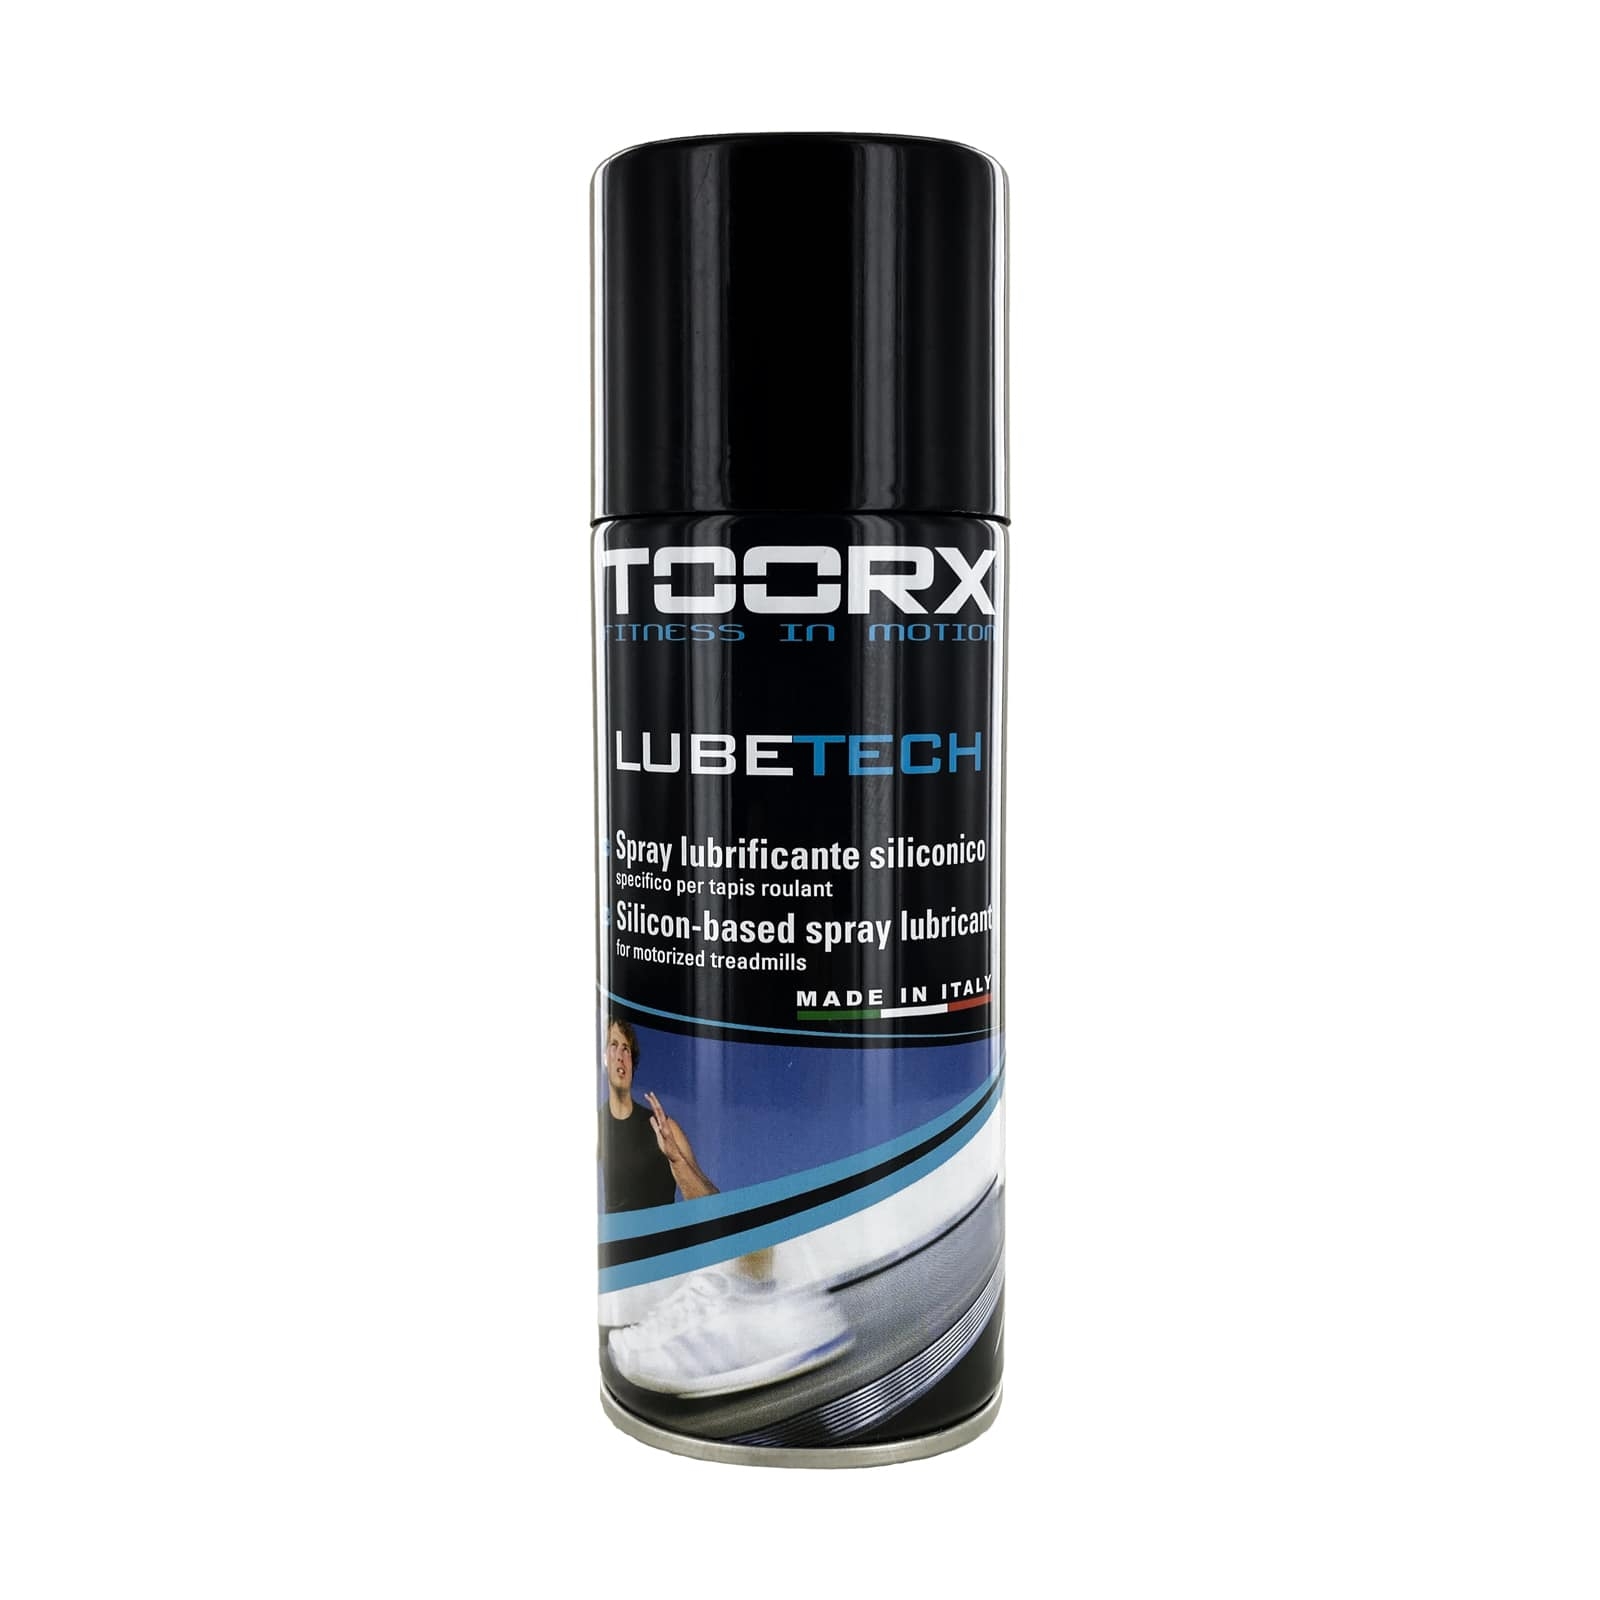 Spray lubrifiant silicone LUBETECH Toorx